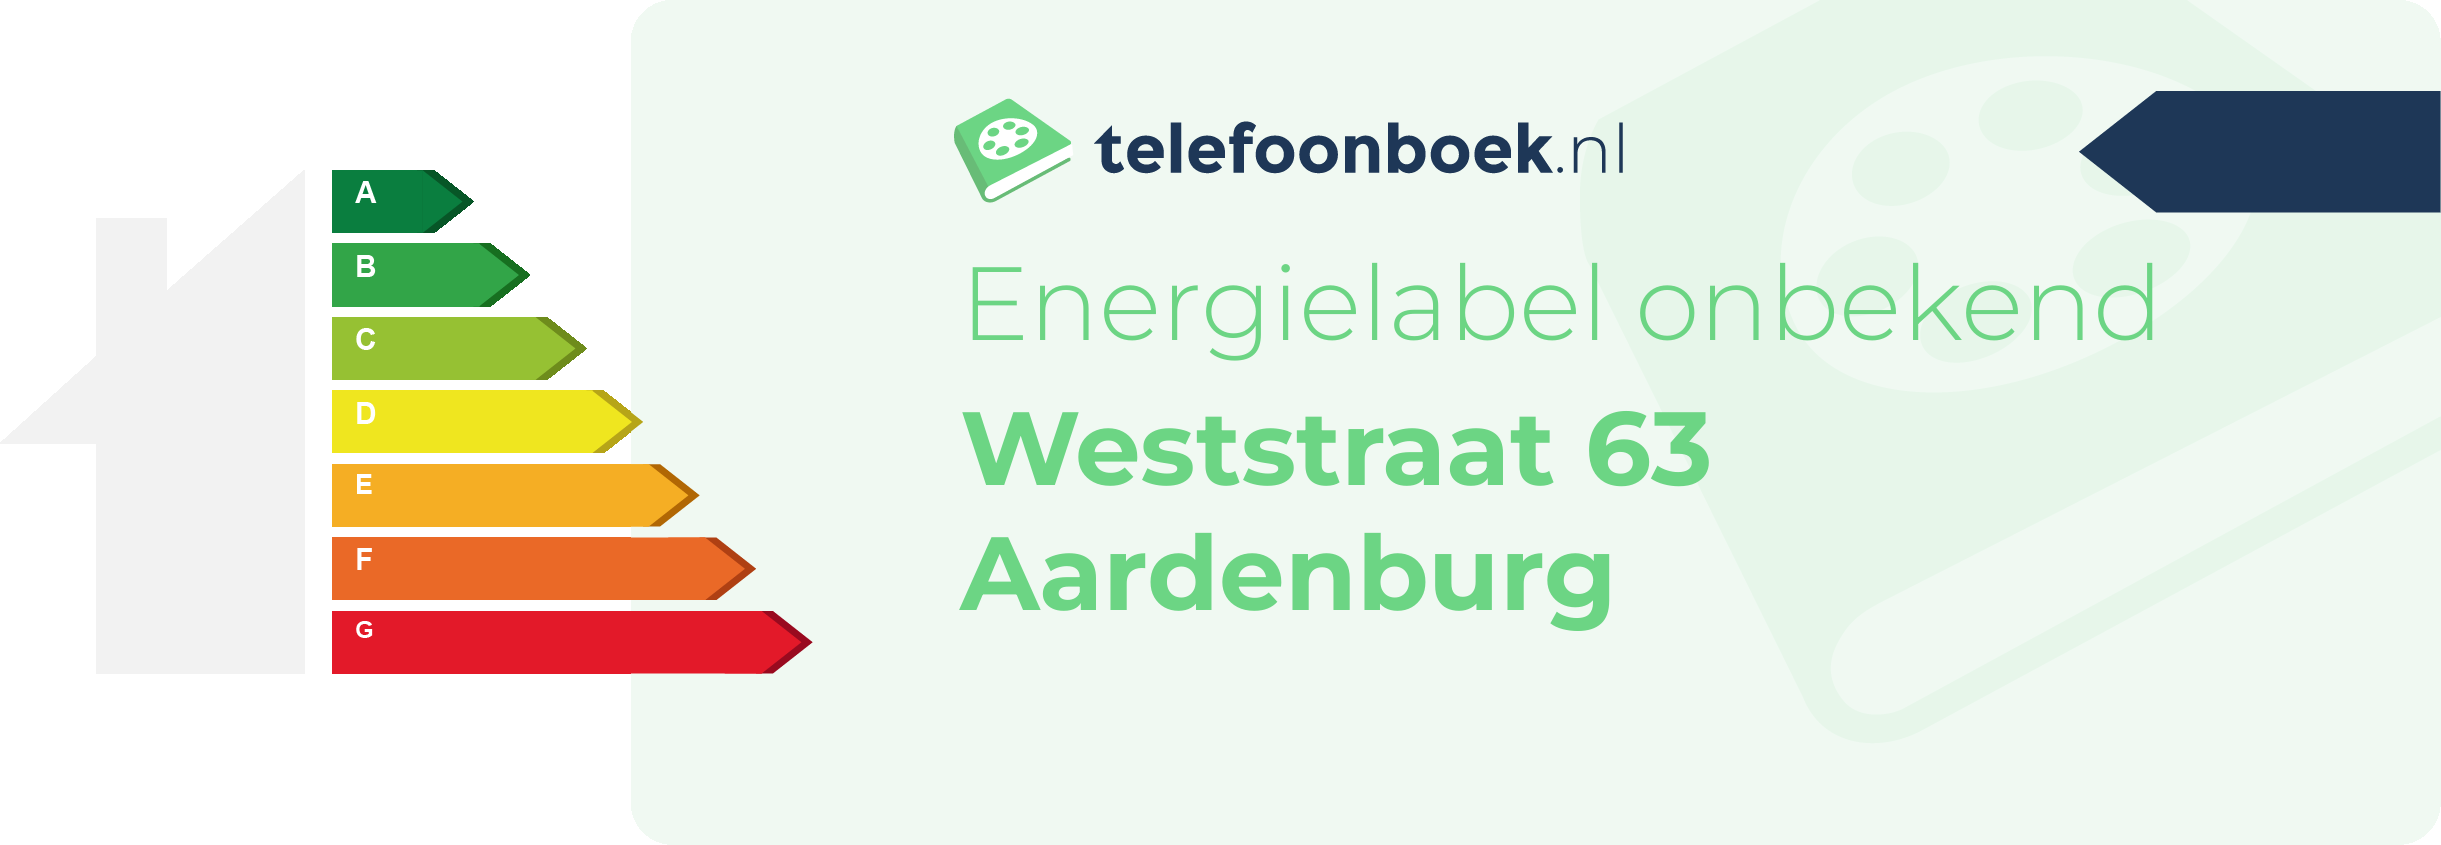 Energielabel Weststraat 63 Aardenburg